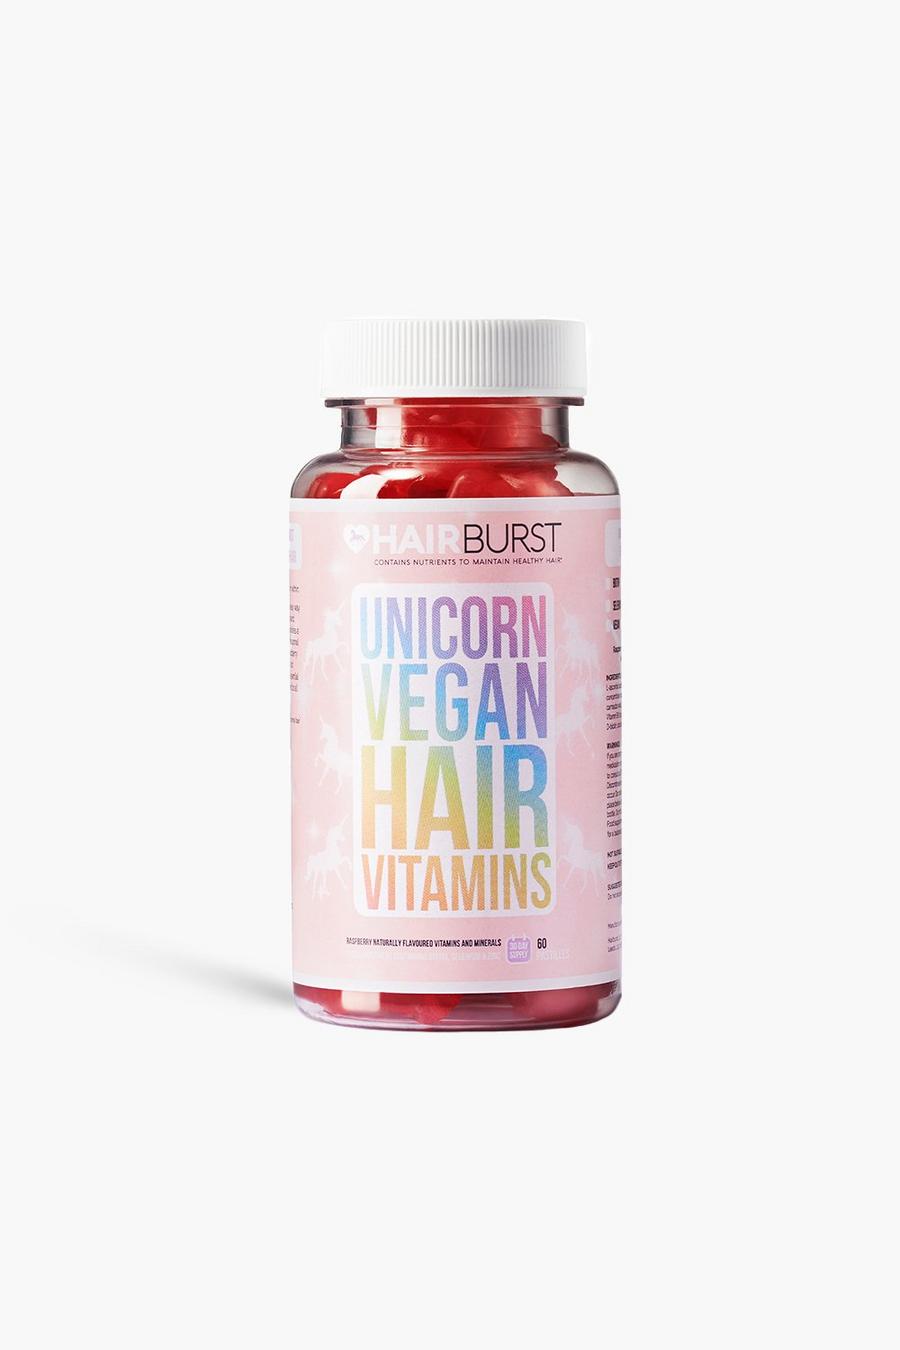 Red rouge Hairburst Unicorn Vegan Hair Vitamins